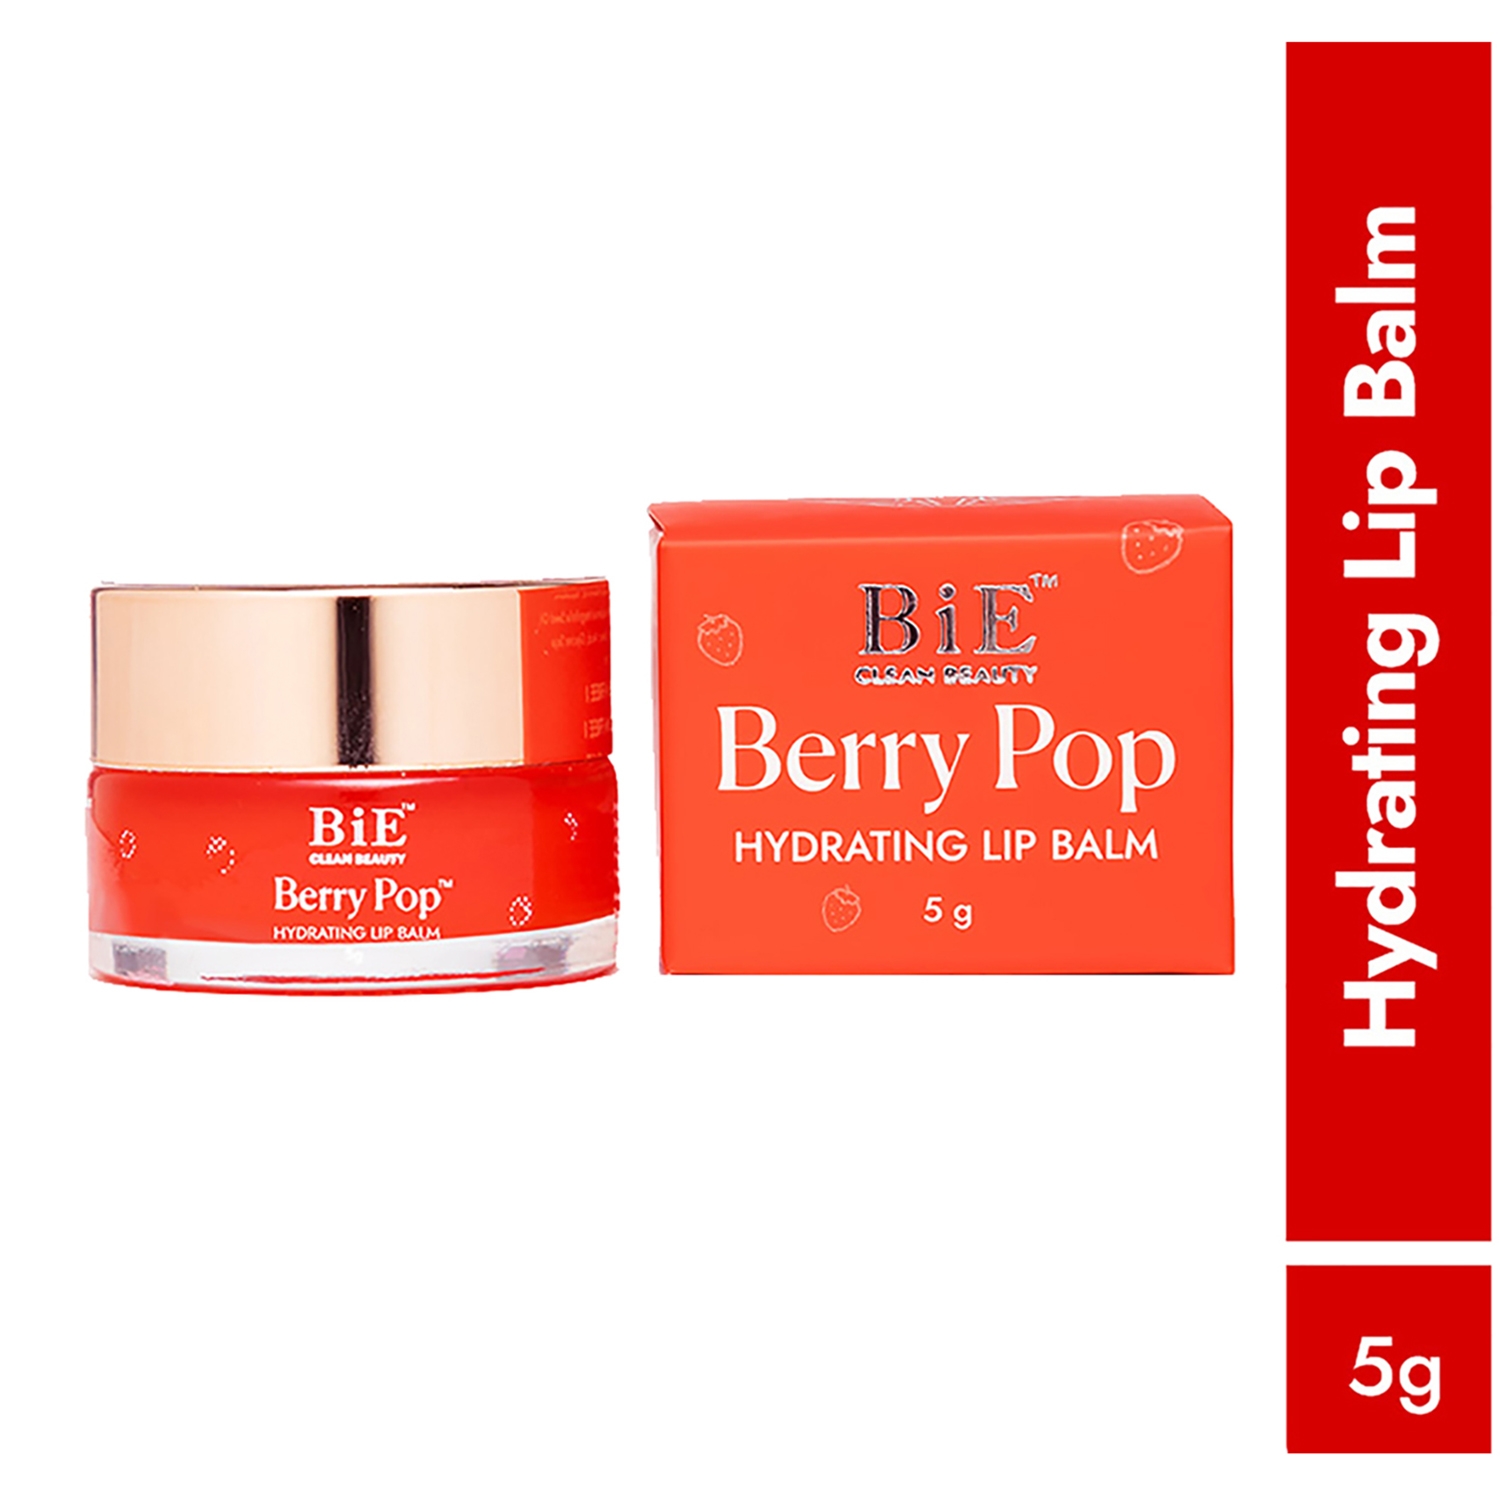 BiE - Beauty In Everything | Bie Berry Pop Hydrating Lip Balm (5g)